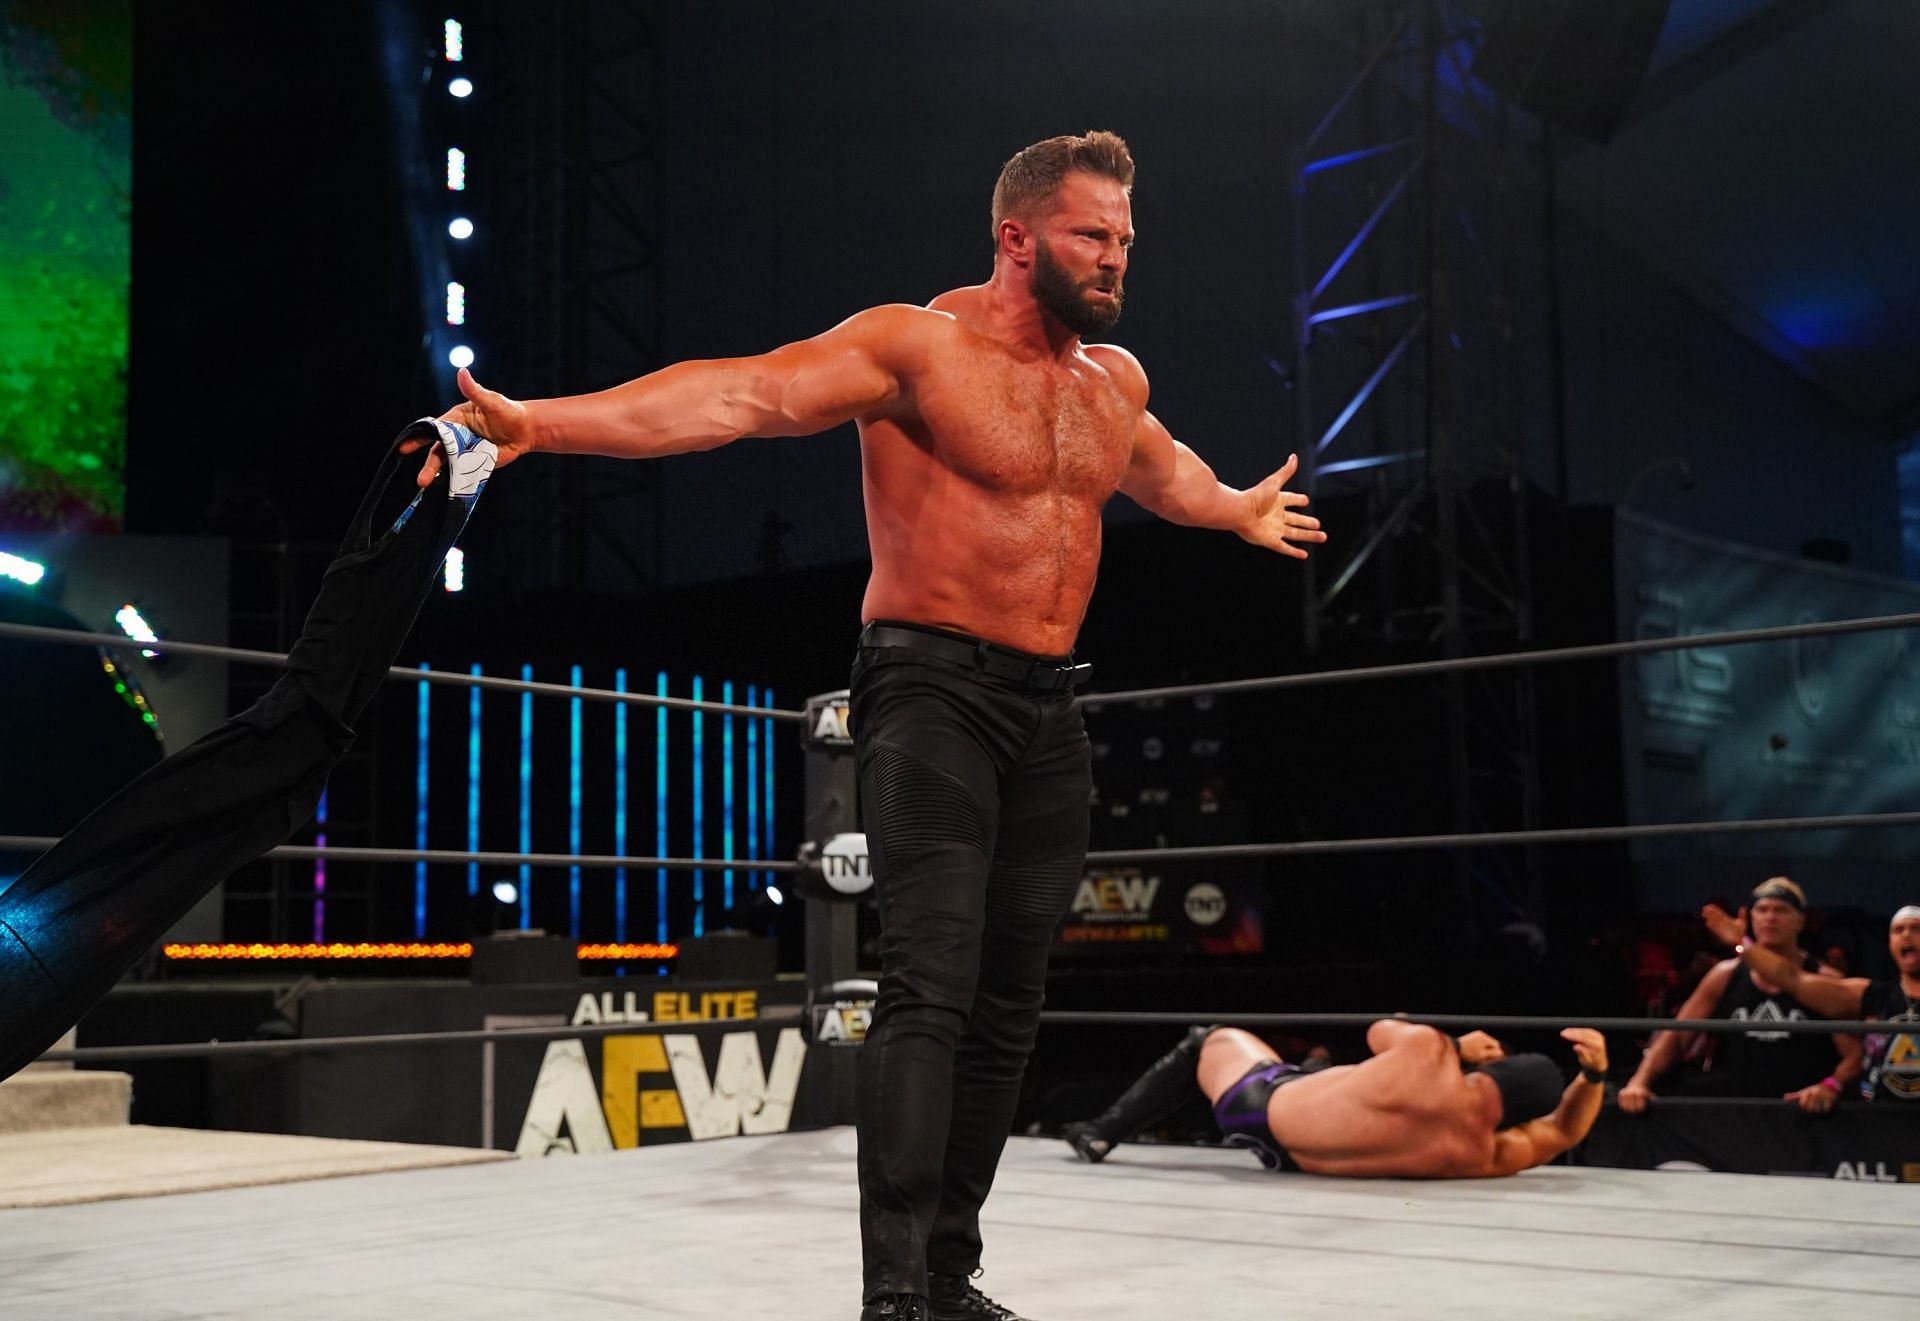 NWA World Champion Matt Cardona wrestled in AEW in 2020.